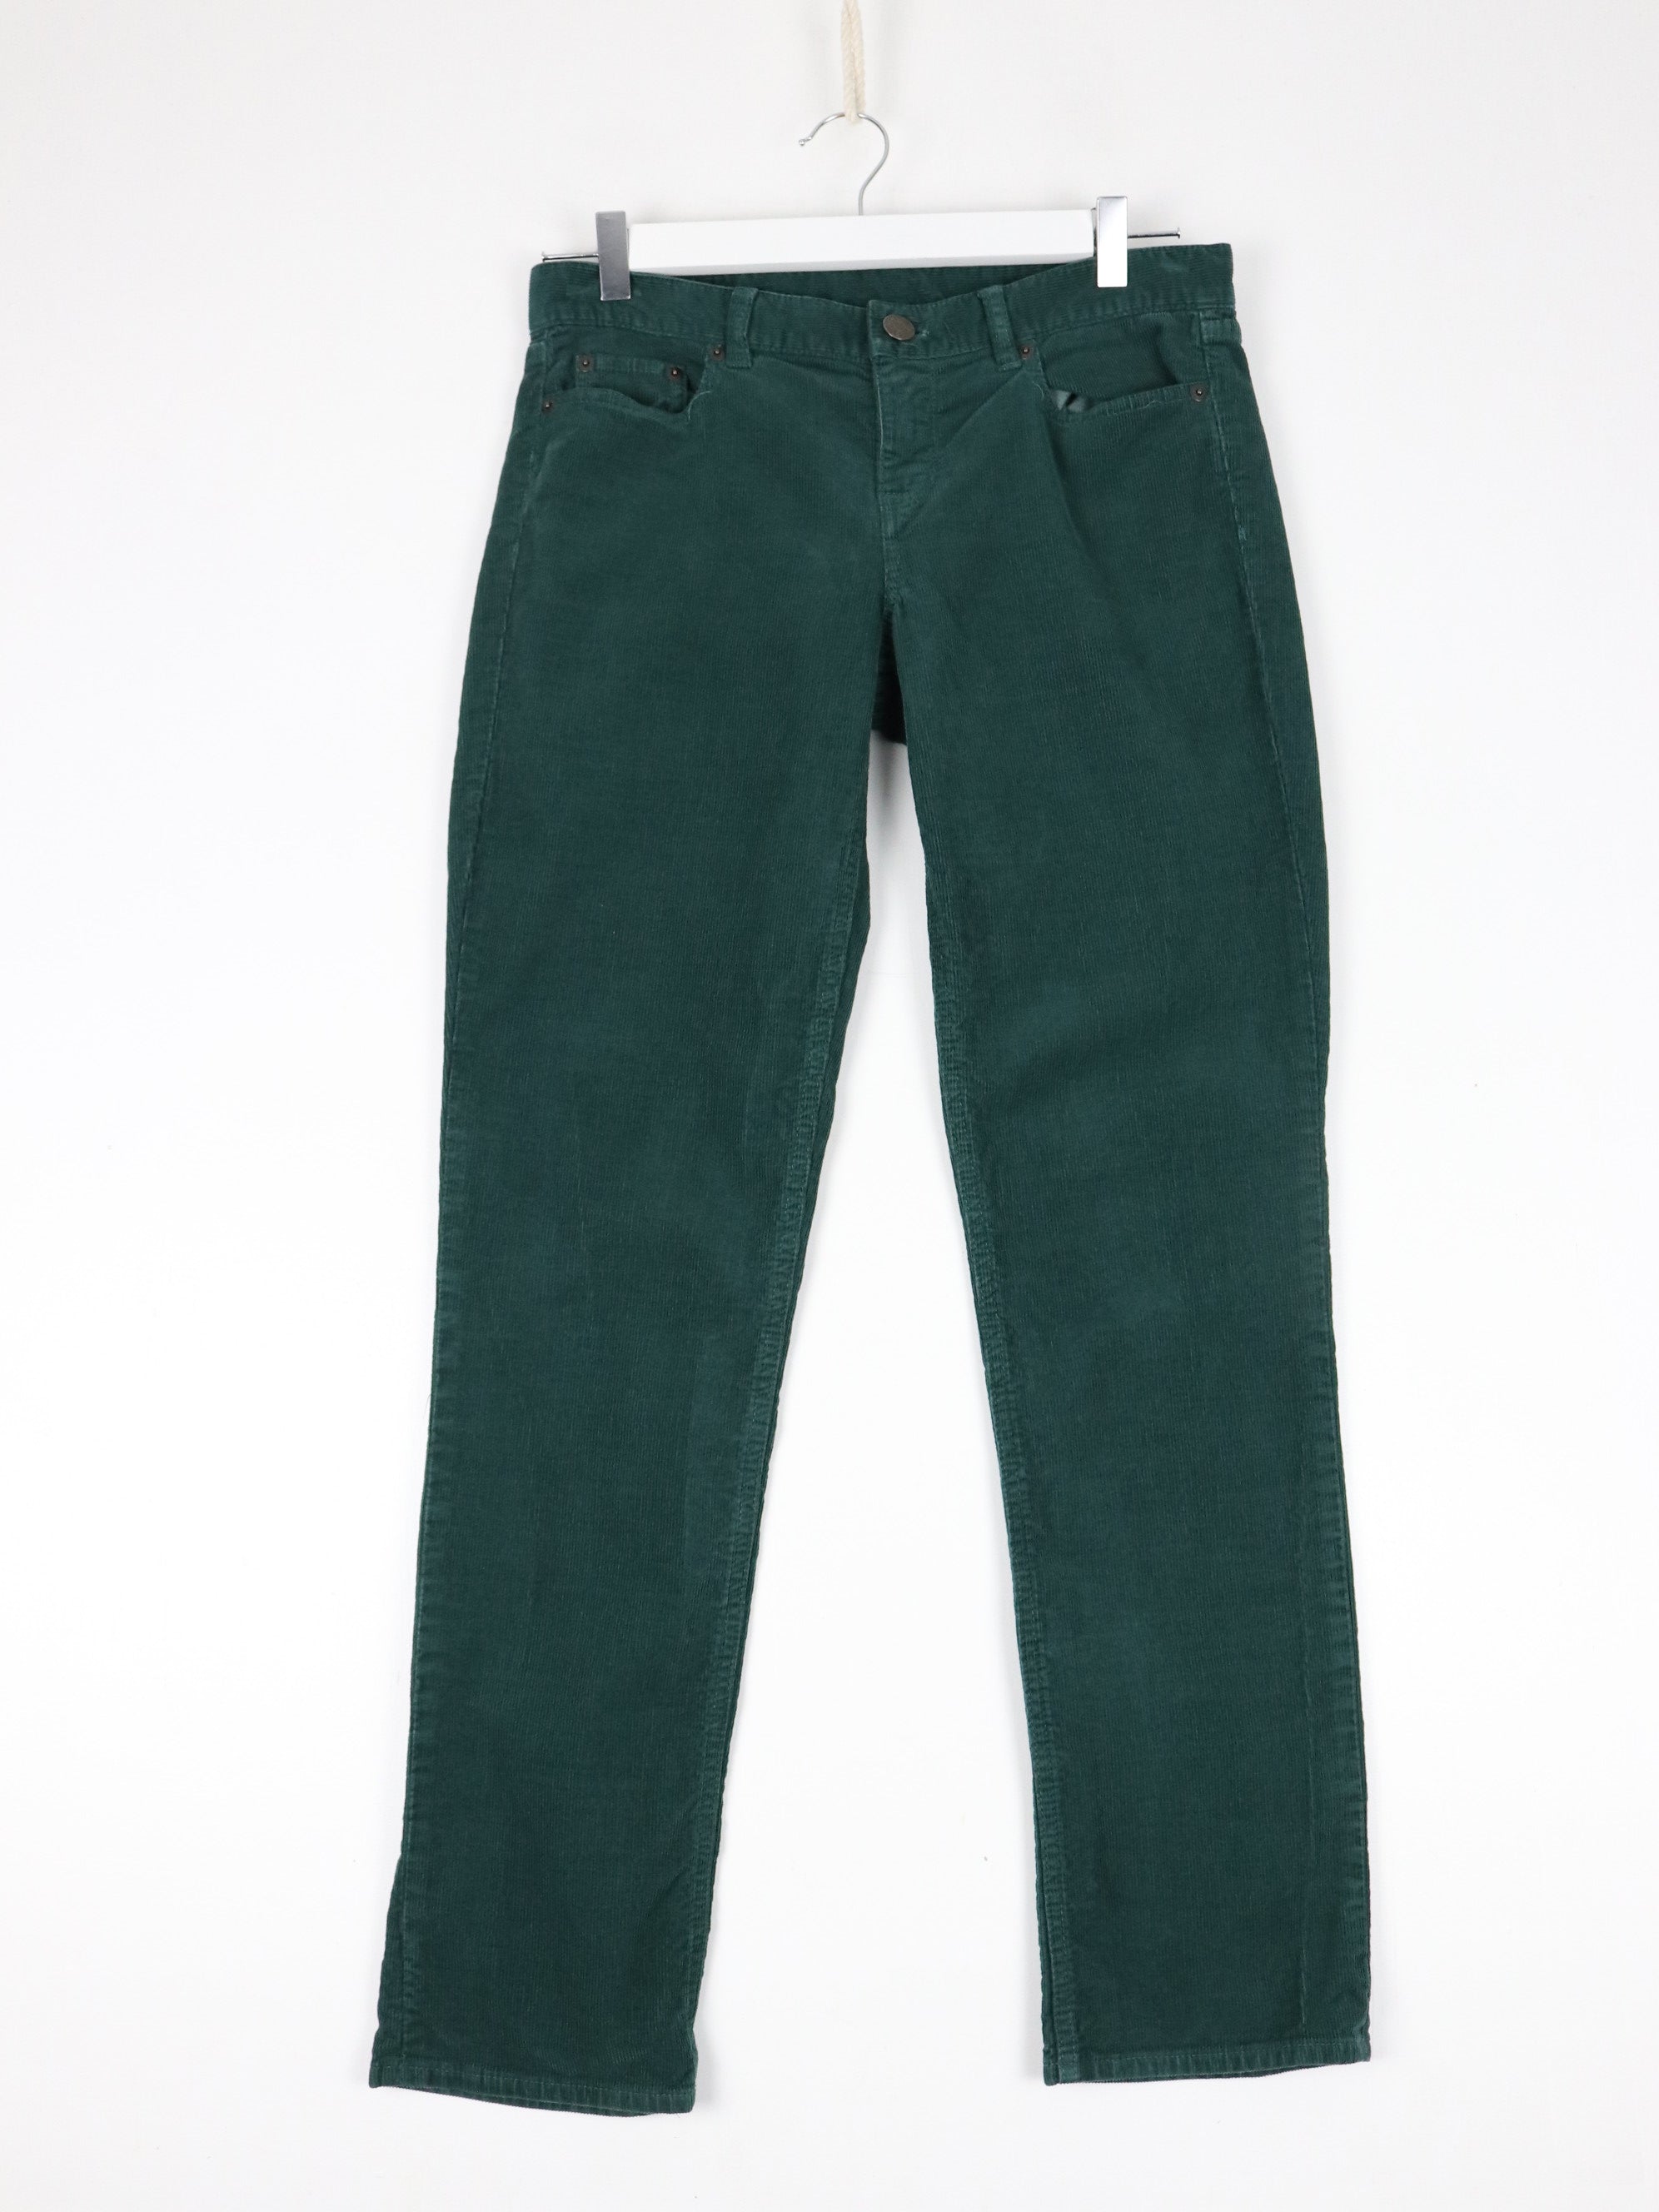 J. Crew Pants Fits Womens 30 x 29 Green Corduroy Trousers